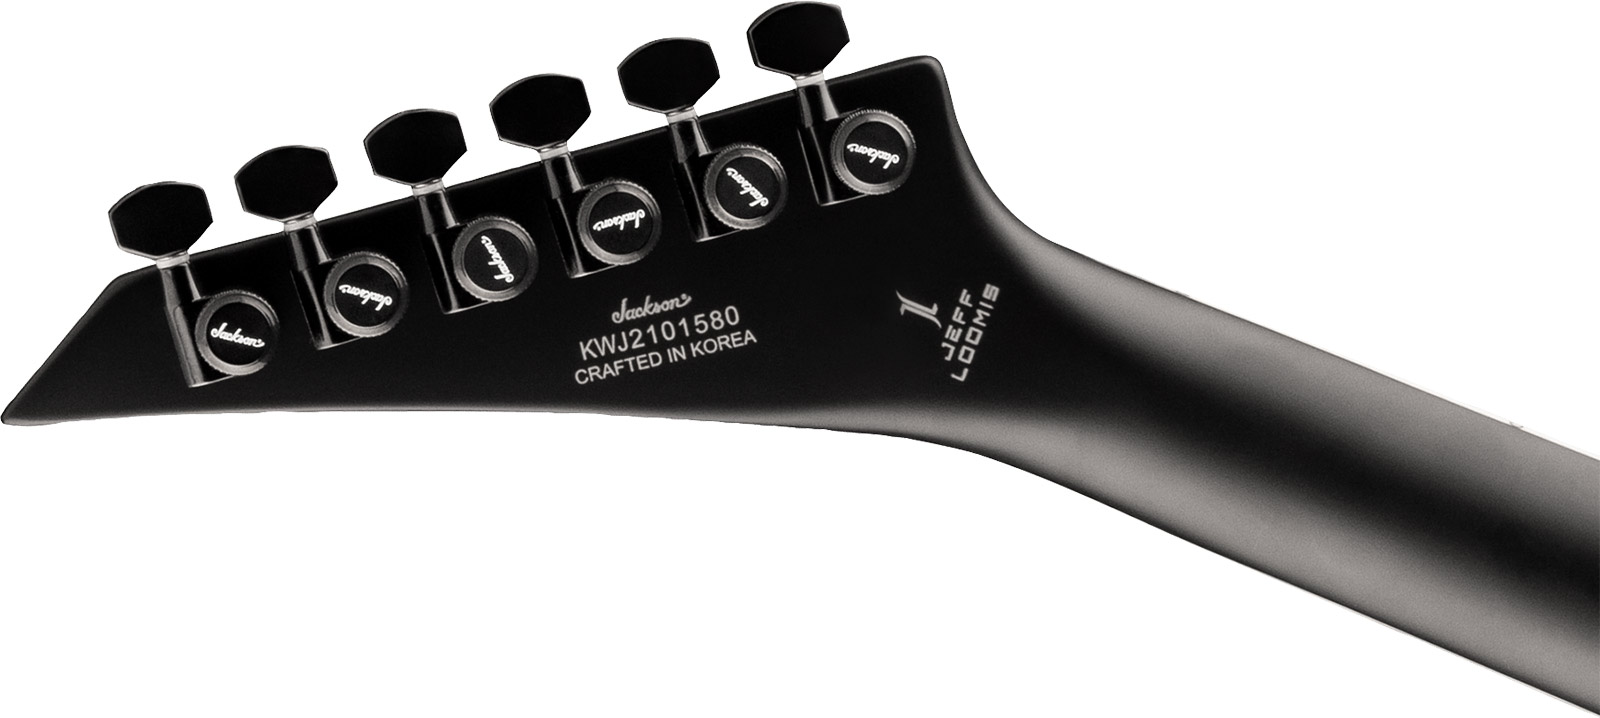 Jackson Jeff Loomis Kelly Ht6 Ash Pro Ltd Signature 2h Seymour Duncan Ht Eb - Black - Metalen elektrische gitaar - Variation 3